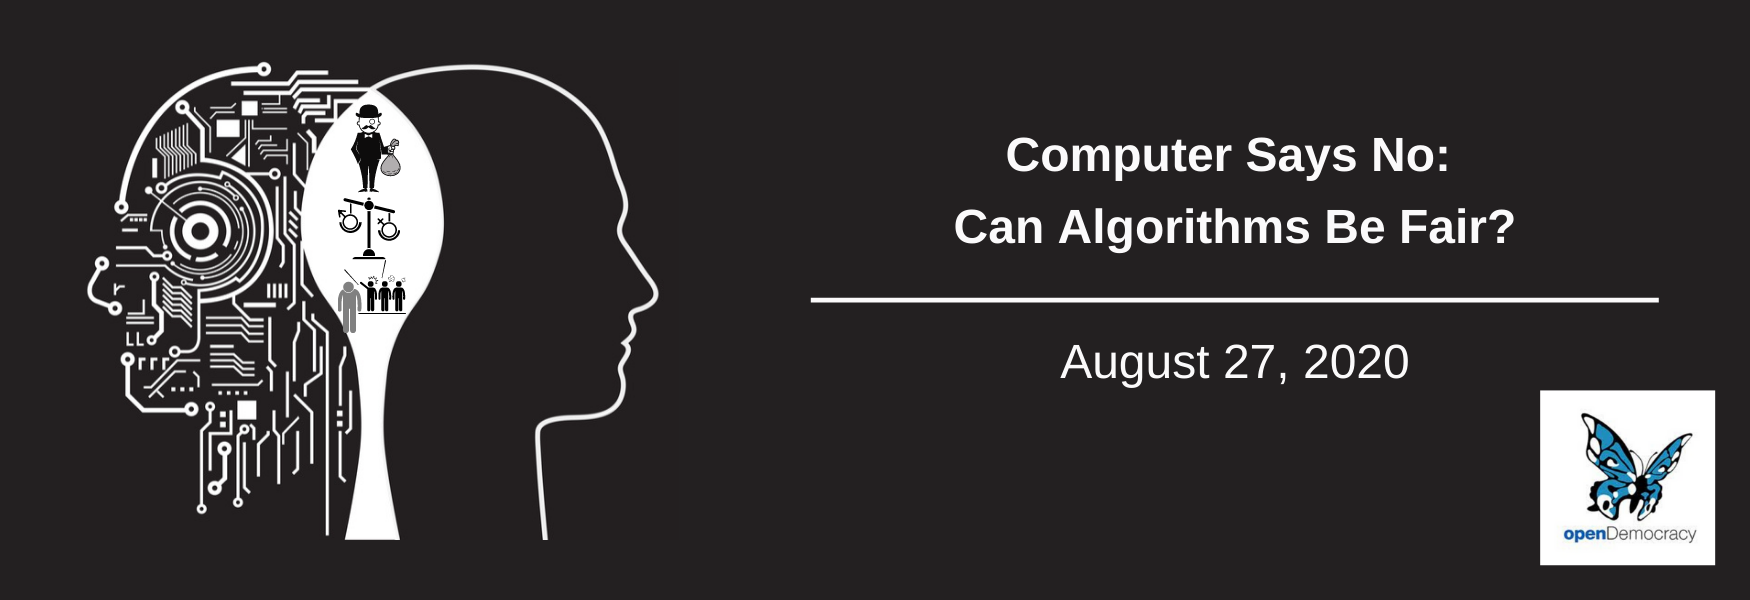 Computer Says No: Can Algorithms Be Fair?